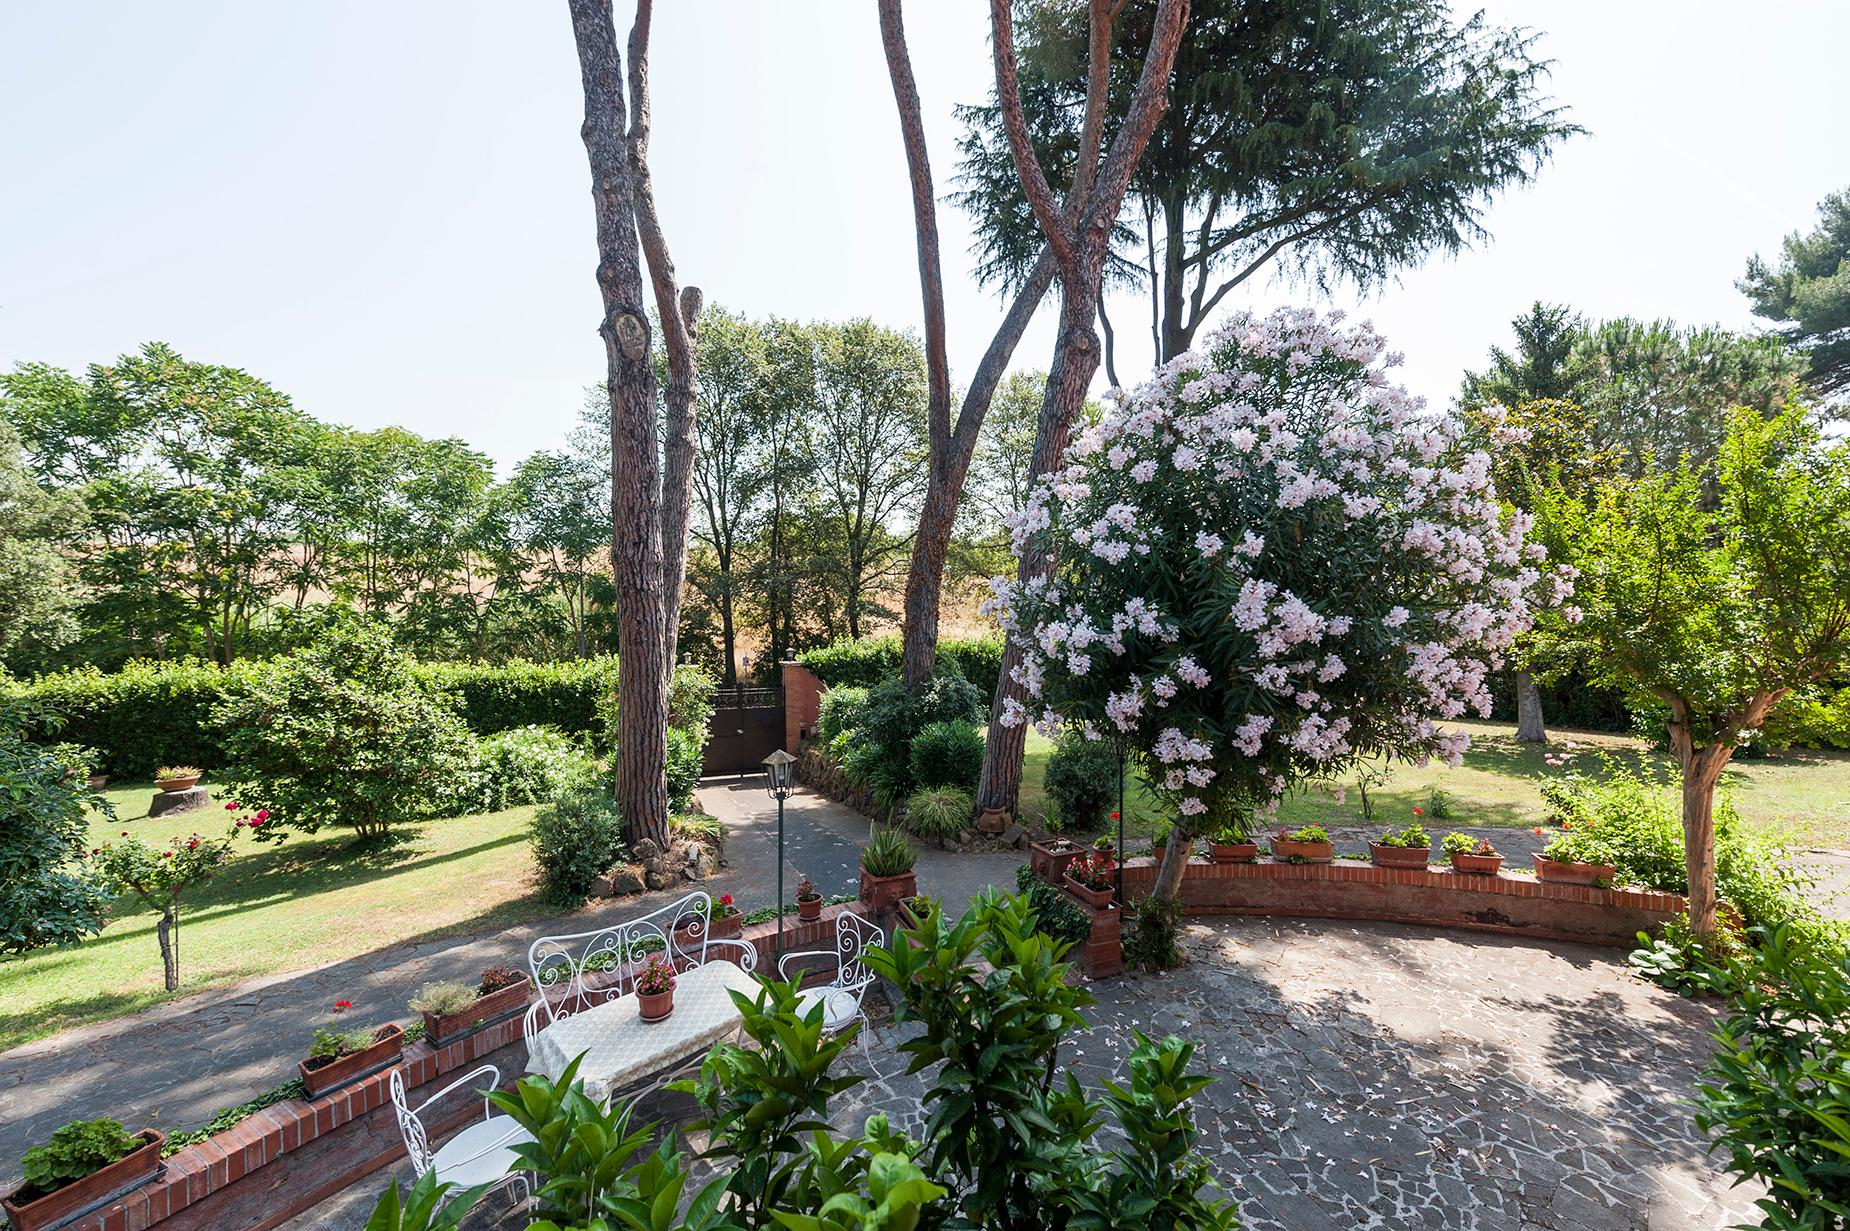                                                     Beautiful villa with large garden near Via Appia Antica                                                     - 20